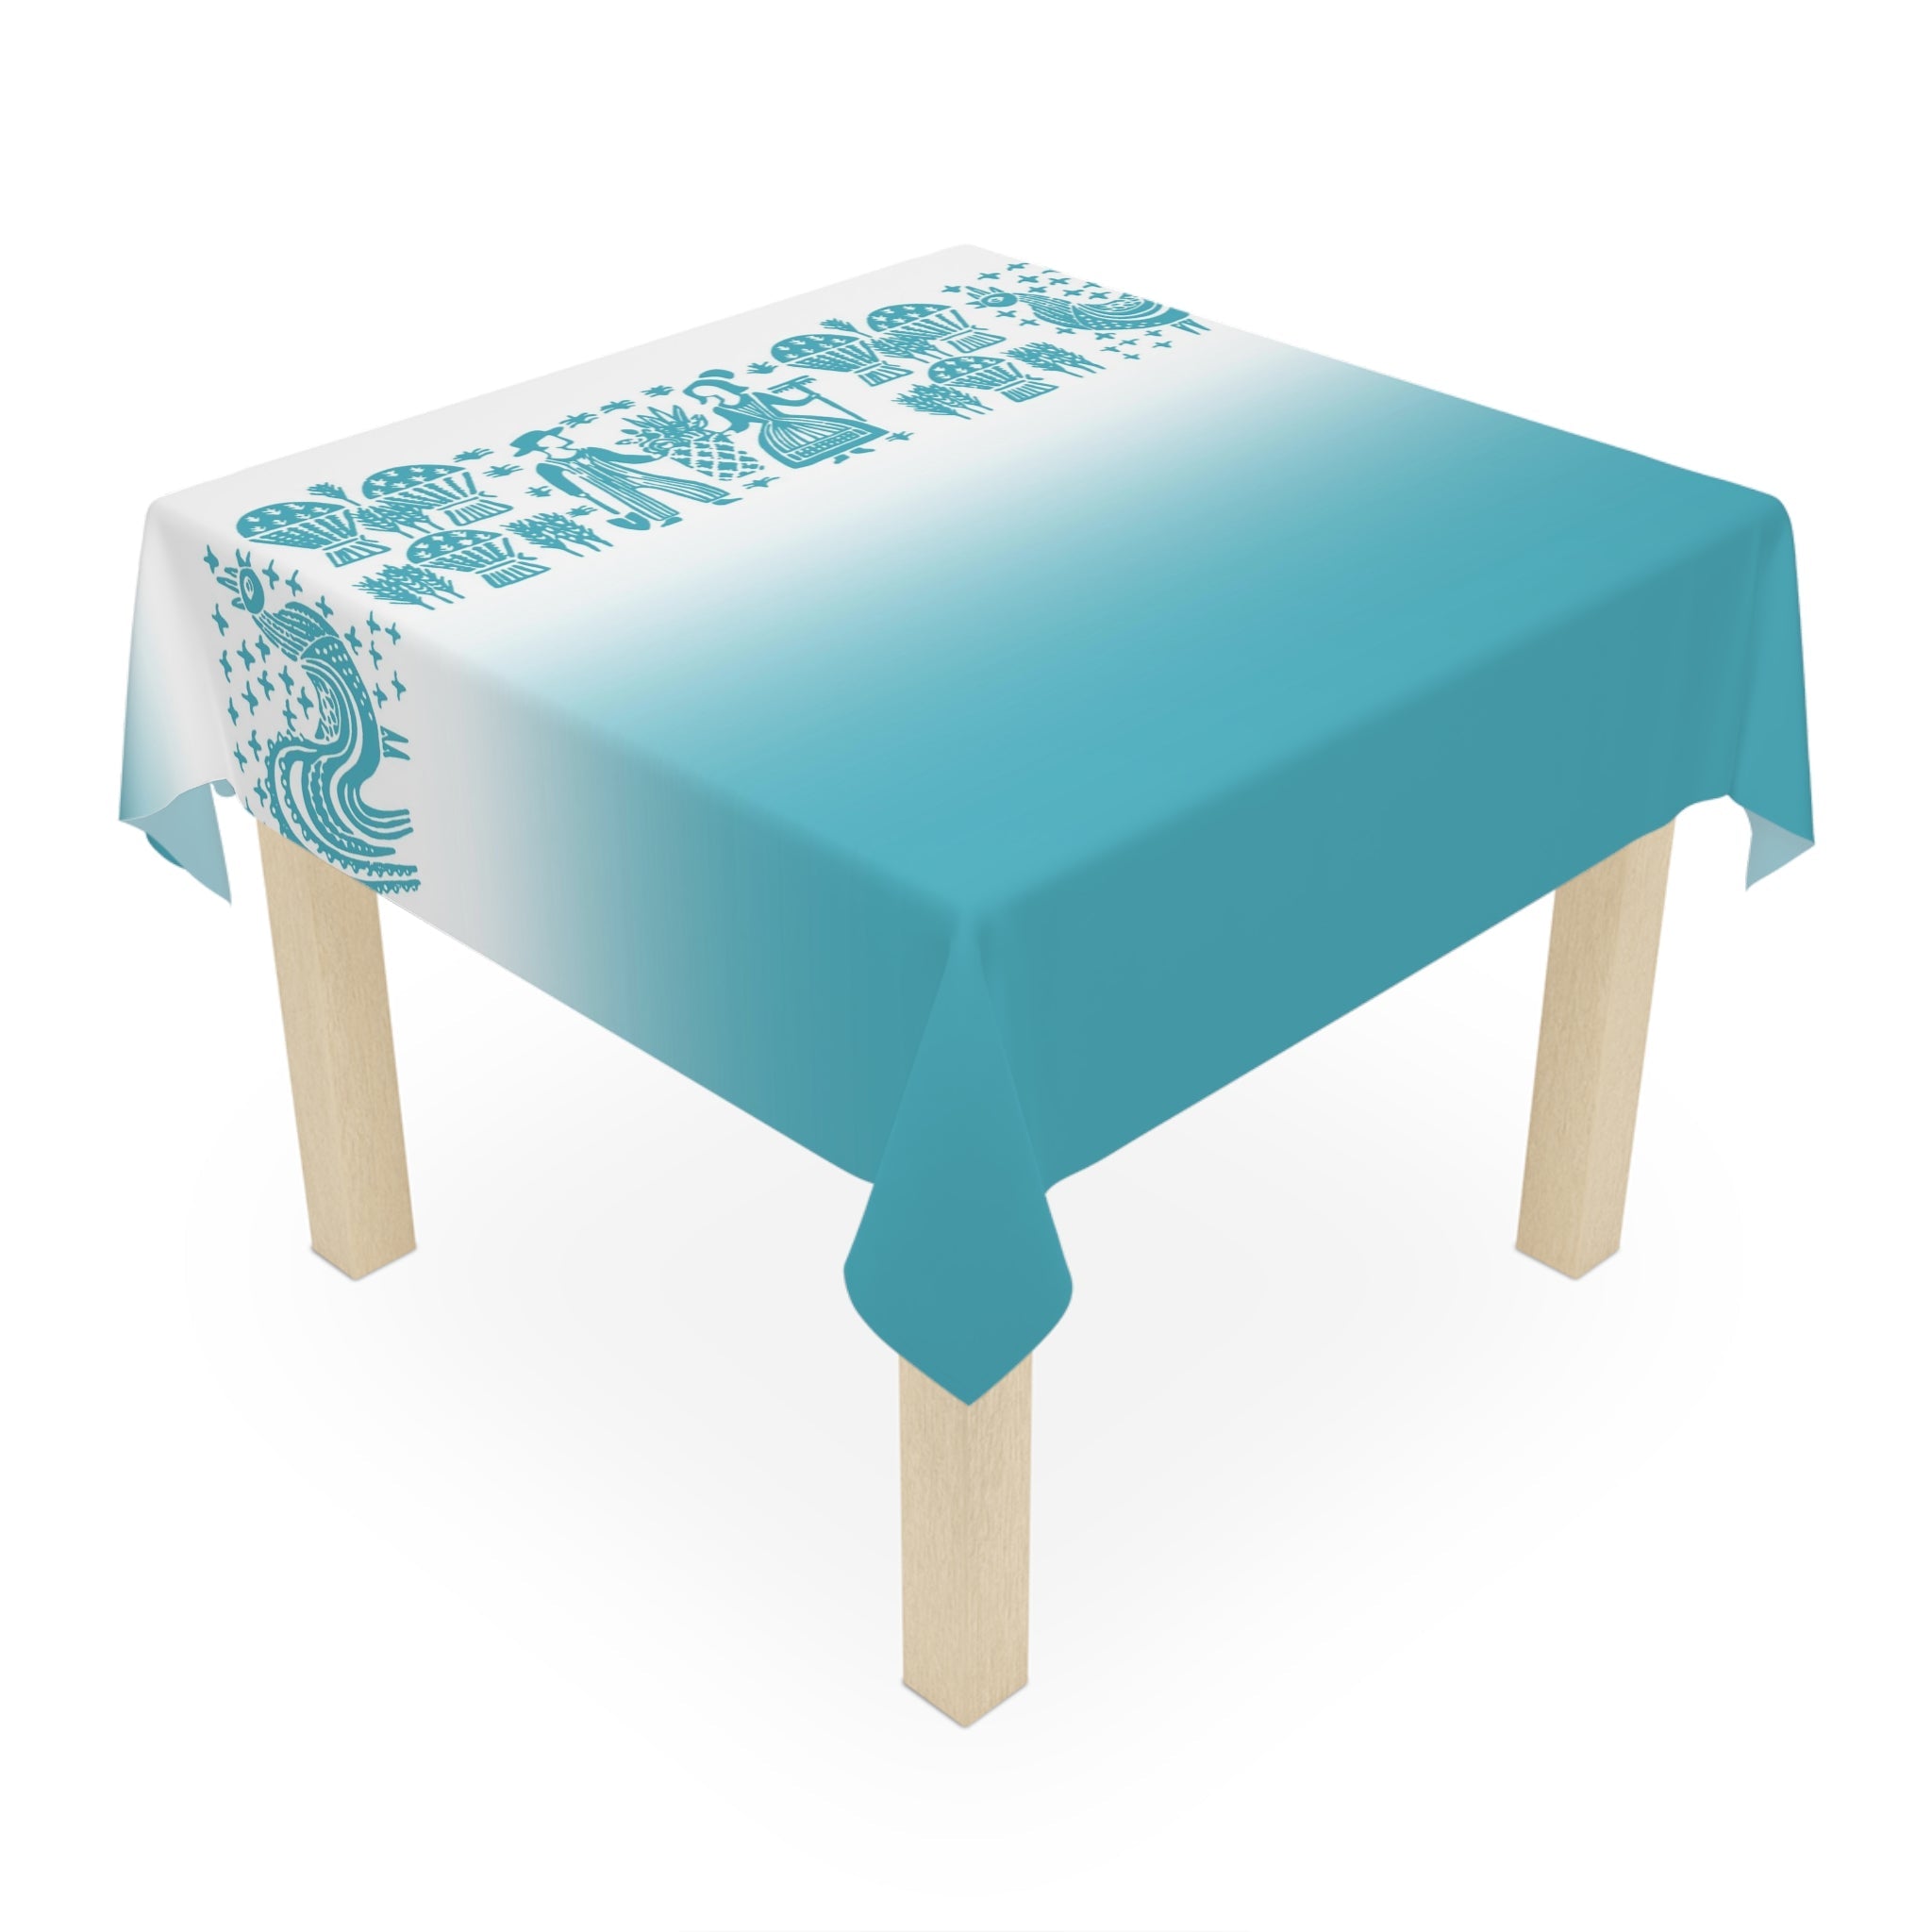 Pyrex Butterprint, Aqua, White, 50s Kitschy Mod Tablecloth Home Decor One size / White